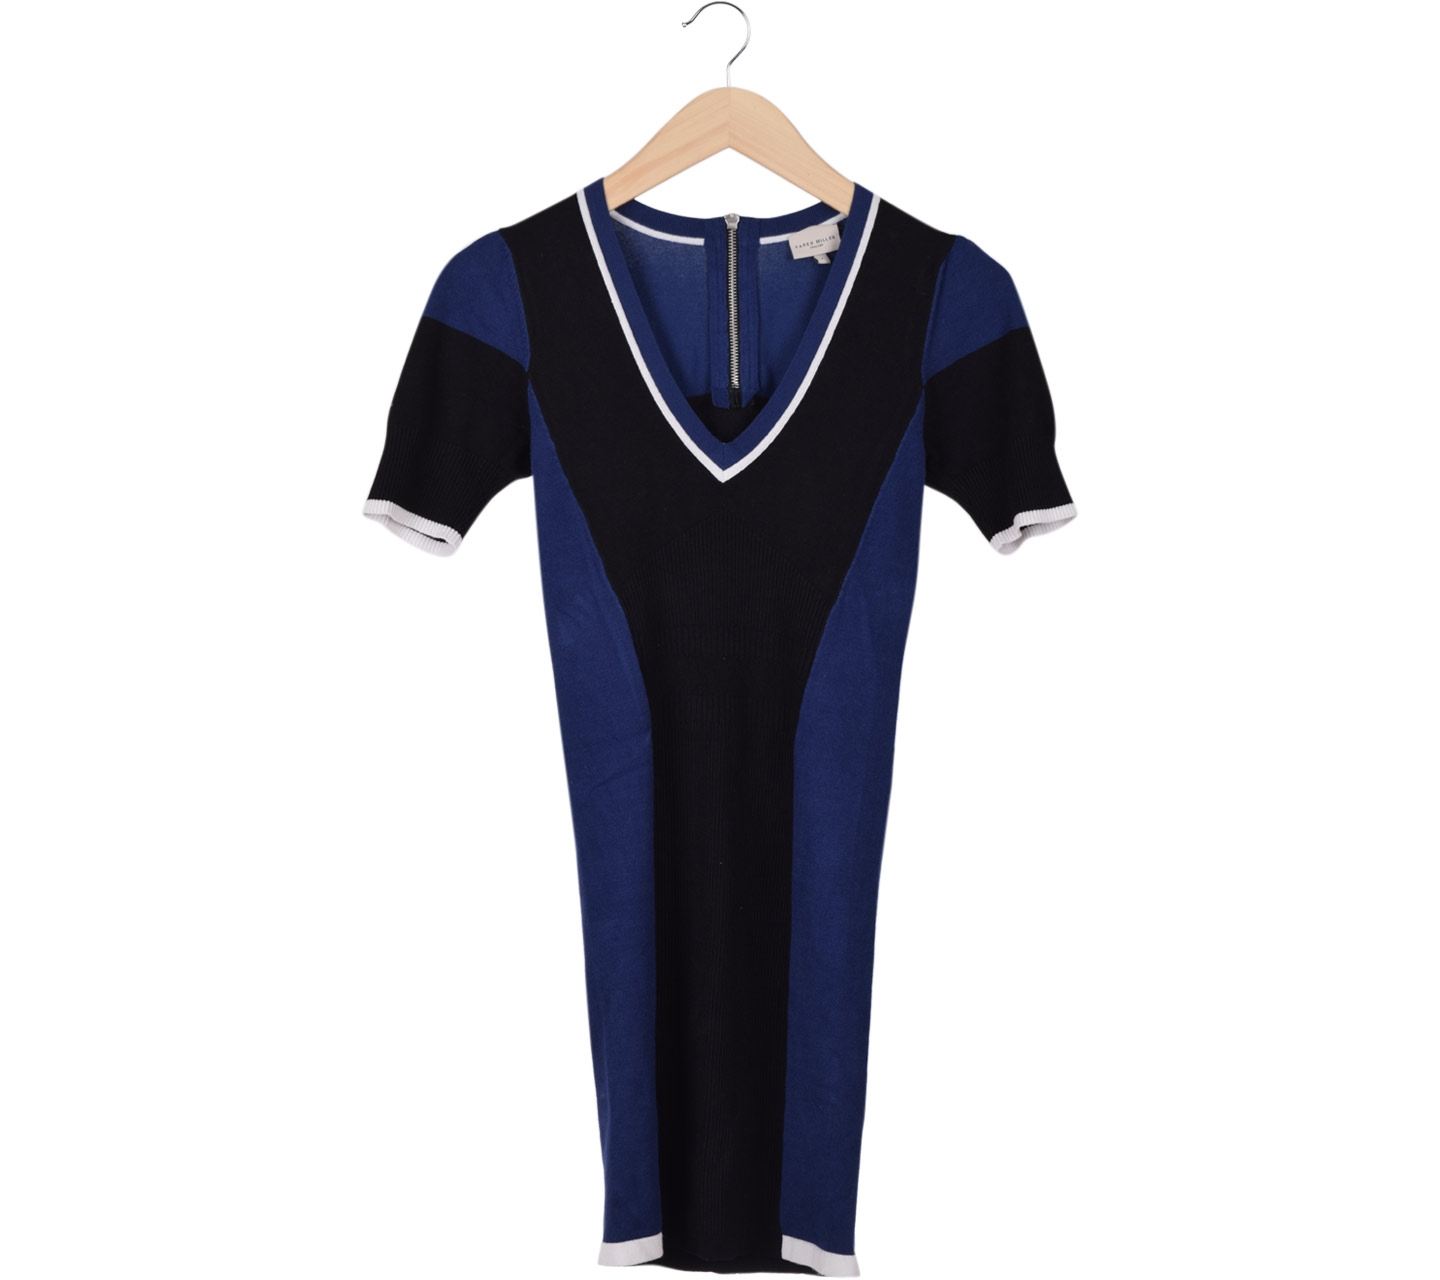 Karen Millen Blue And Black Knitted Mini Dress